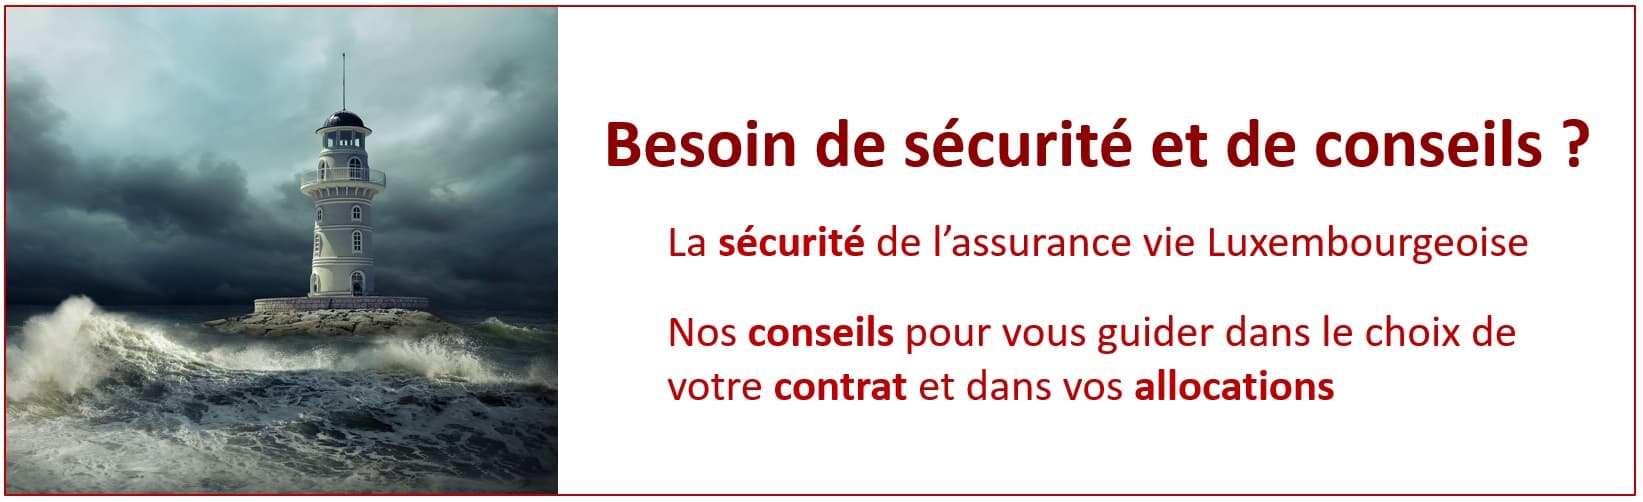 assurance vie luxembourg - securite - conseil